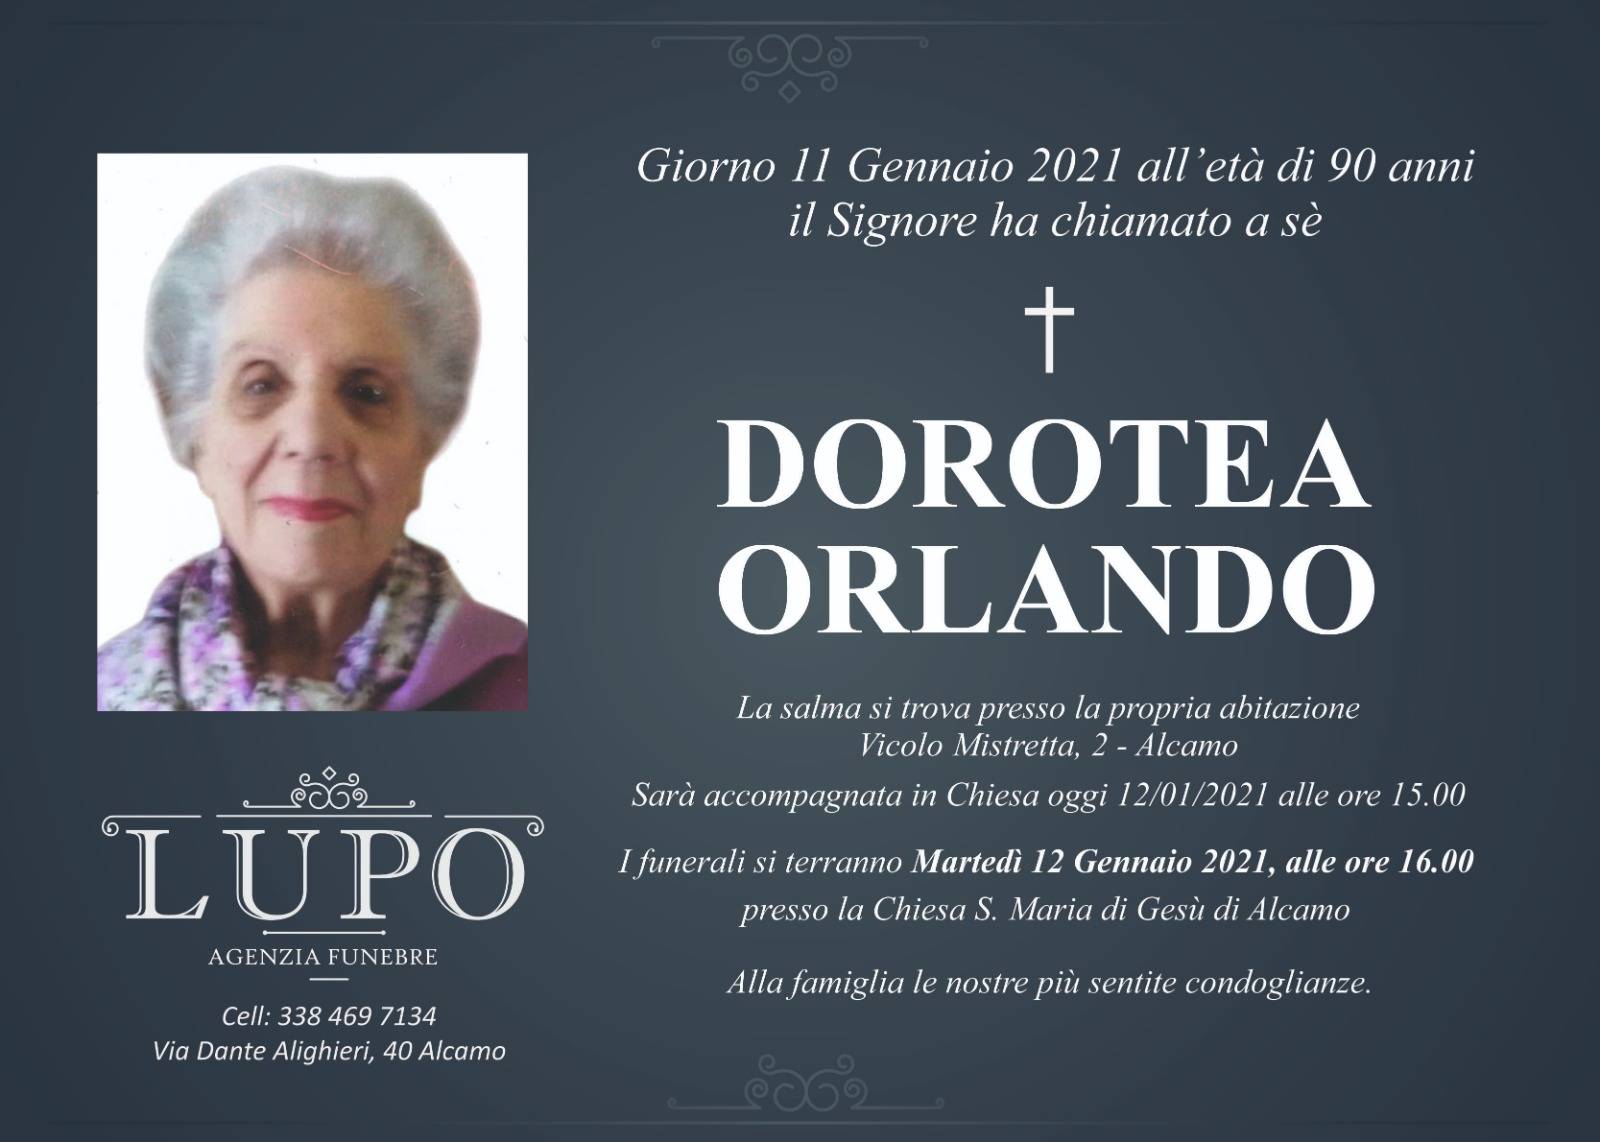 Dorotea Orlando